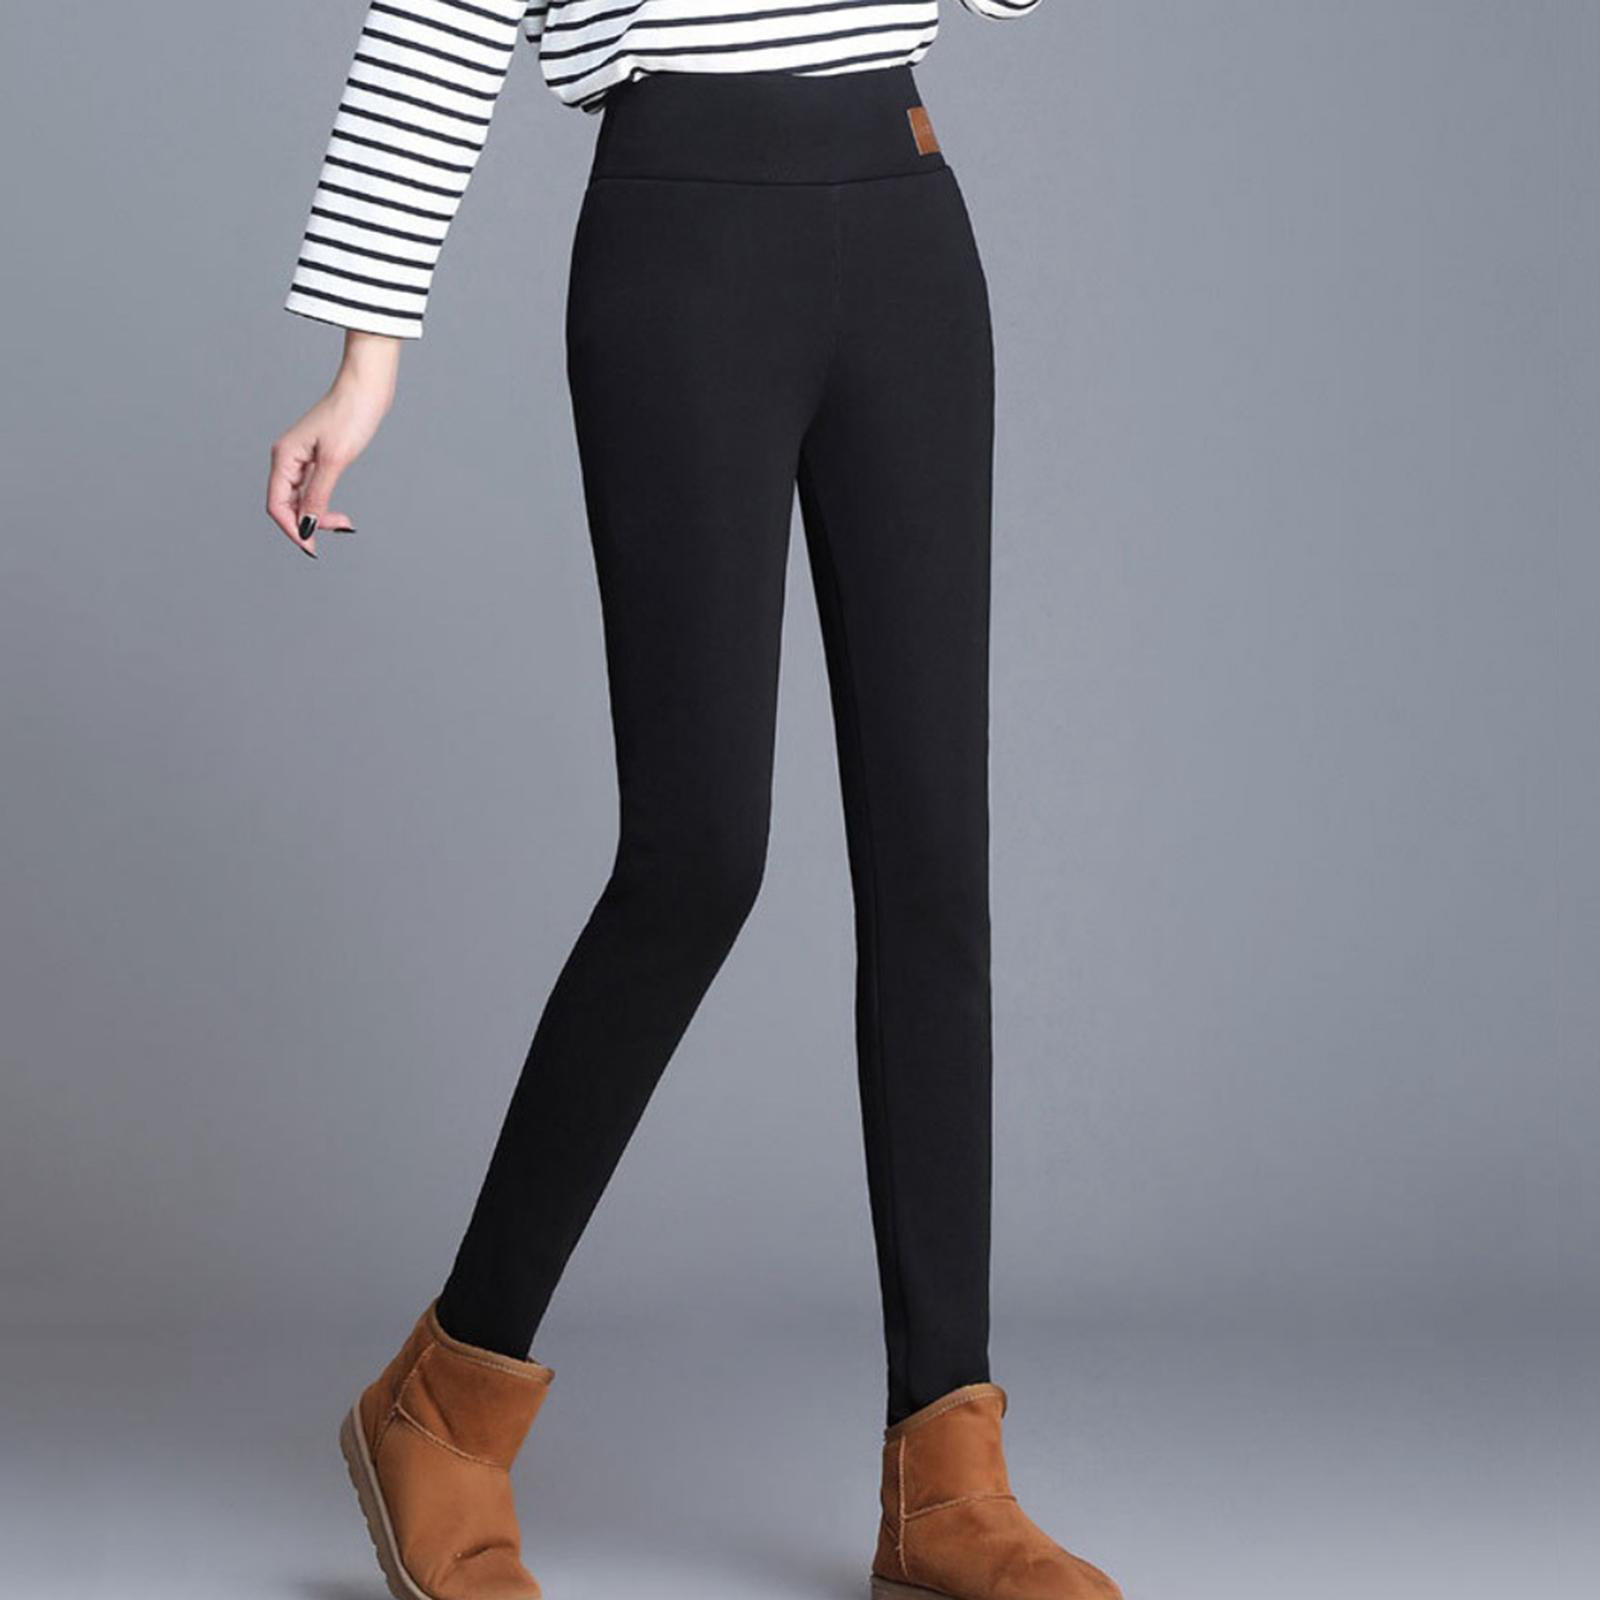 Office Women Pants Thick Design Warm Fleece Trousers Leggings Premium Look Gift 